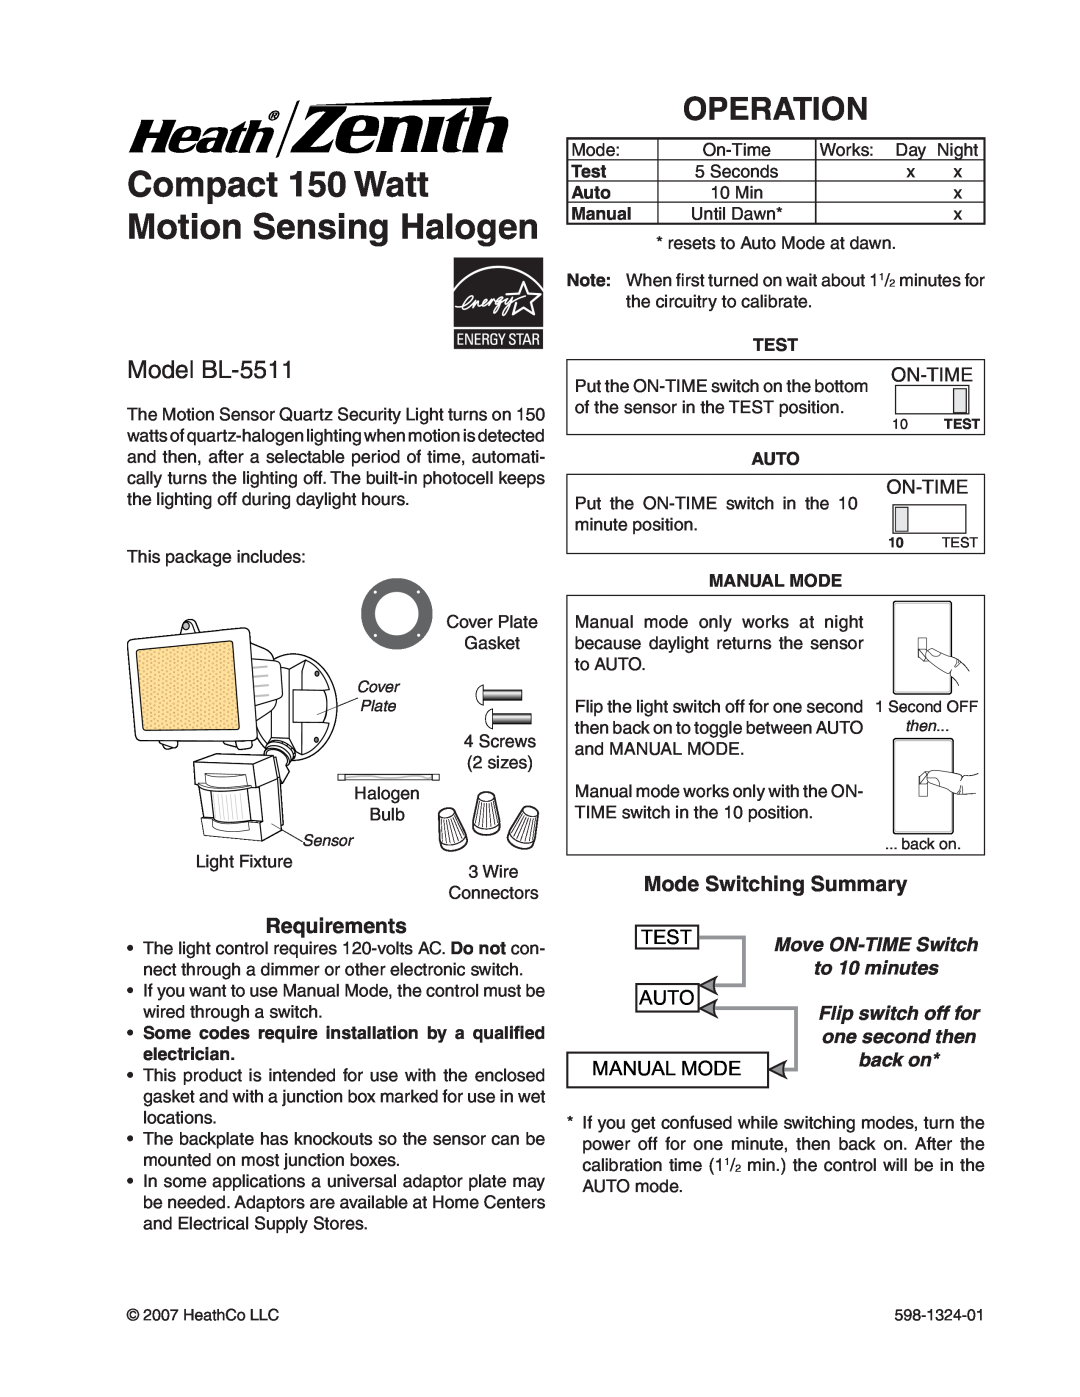 Heath Zenith manual Compact 150 Watt Motion Sensing Halogen, Operation, Model BL-5511, On-Time, Test, to 10 minutes 